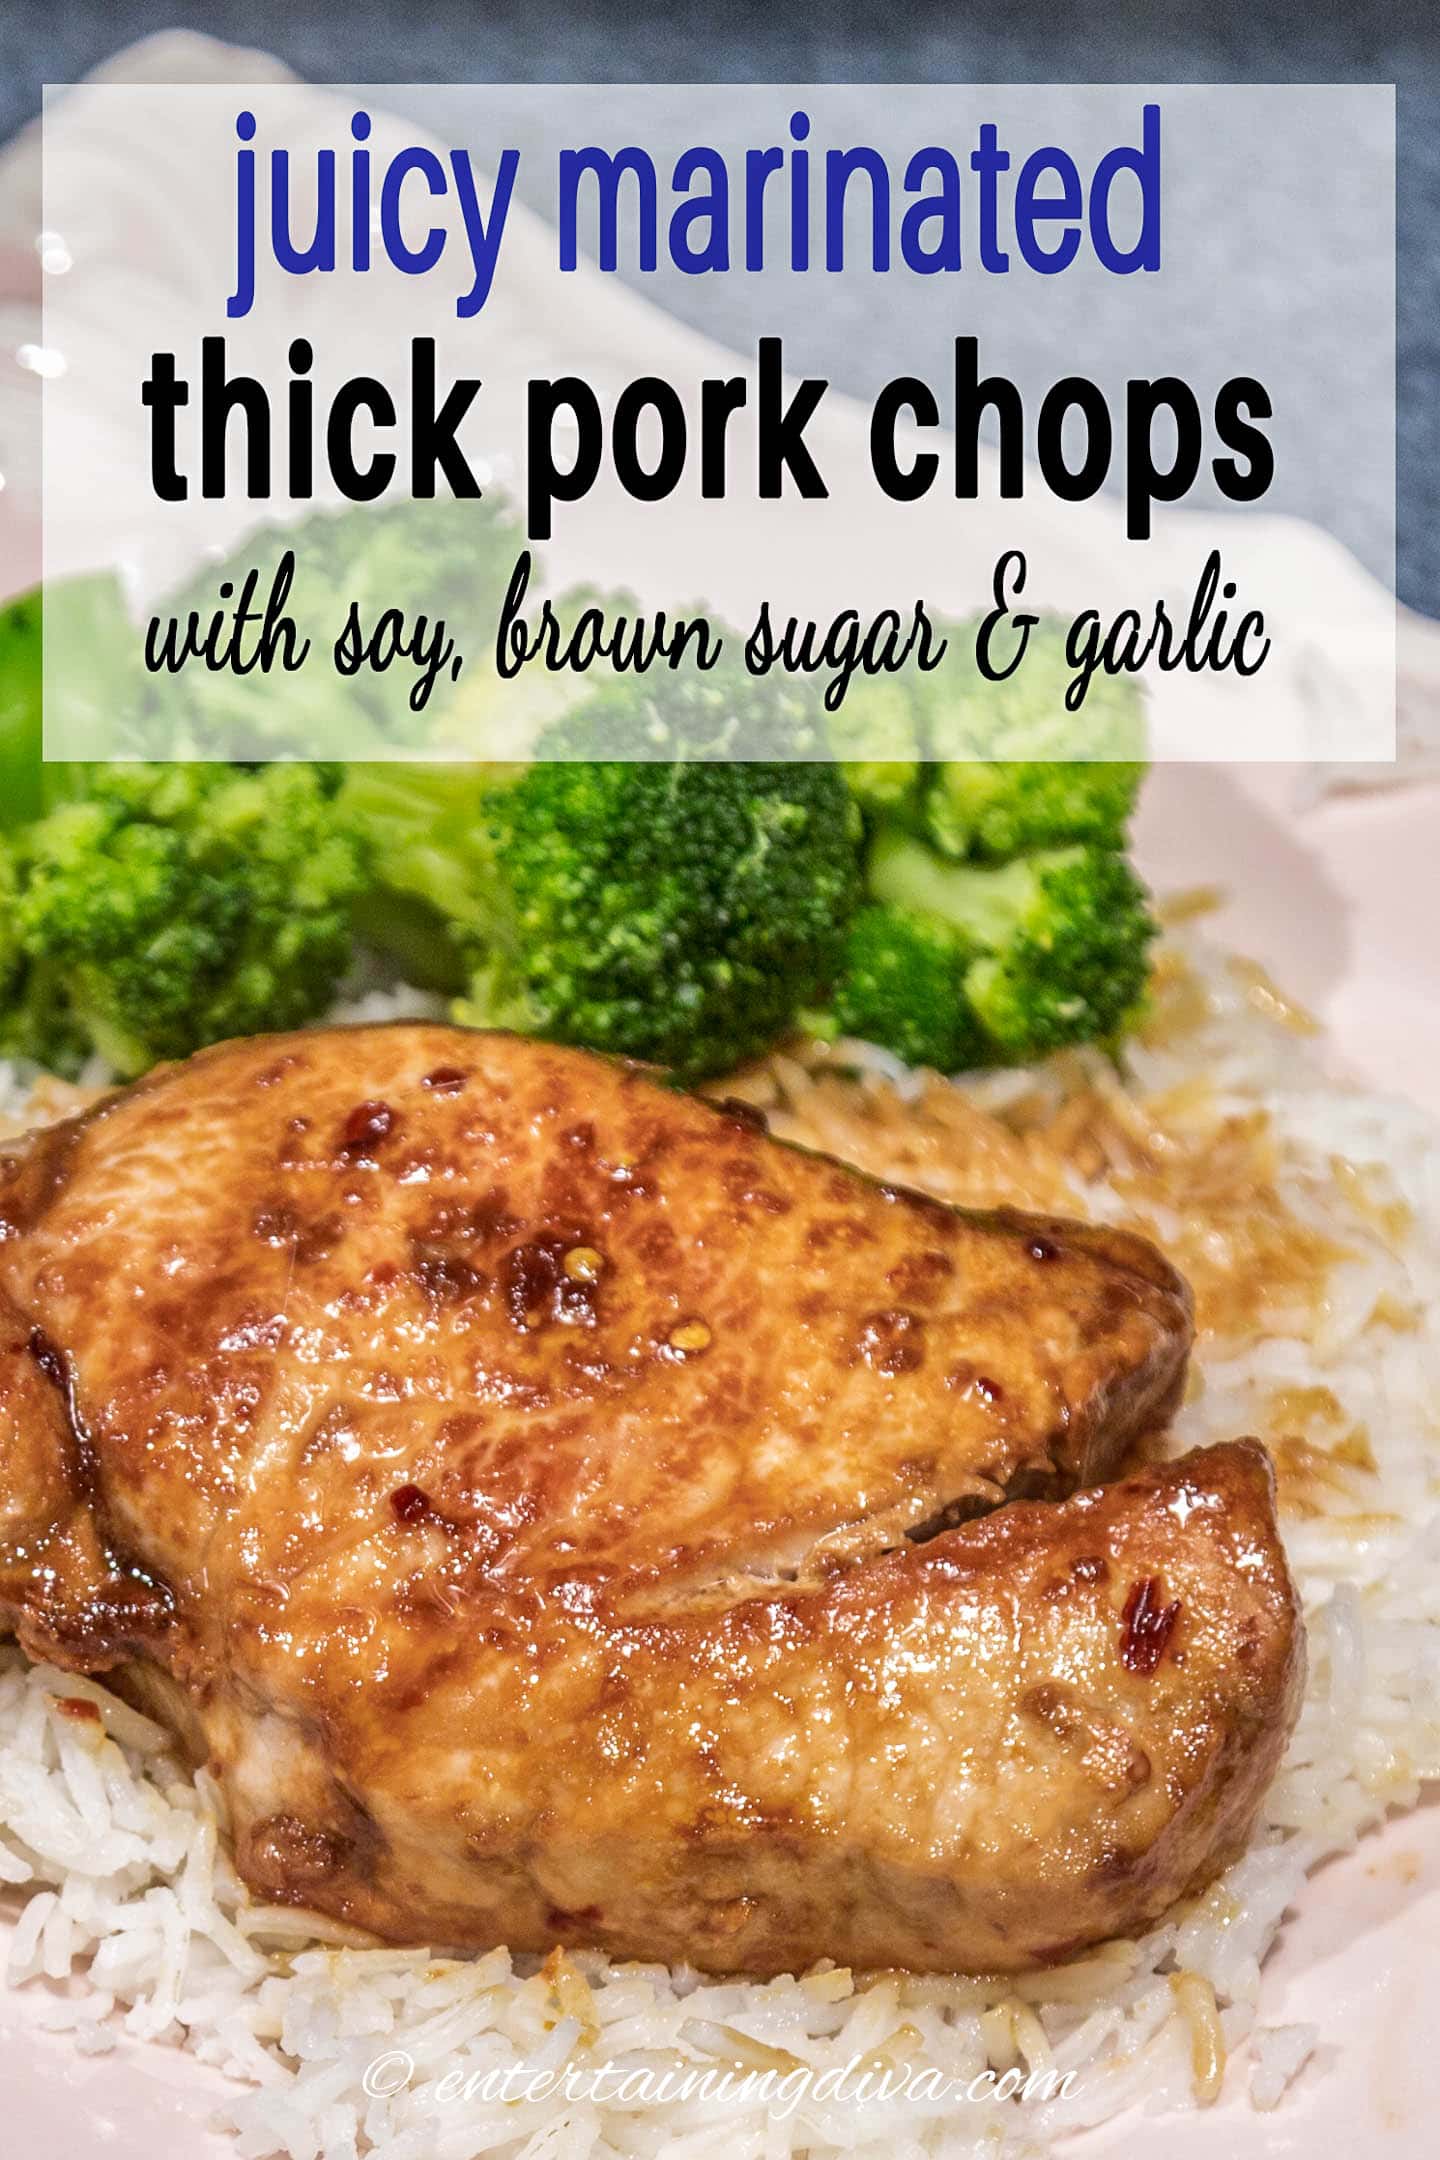 juicy thick pork chops marinated with soy sauce, brown sugar and garlic